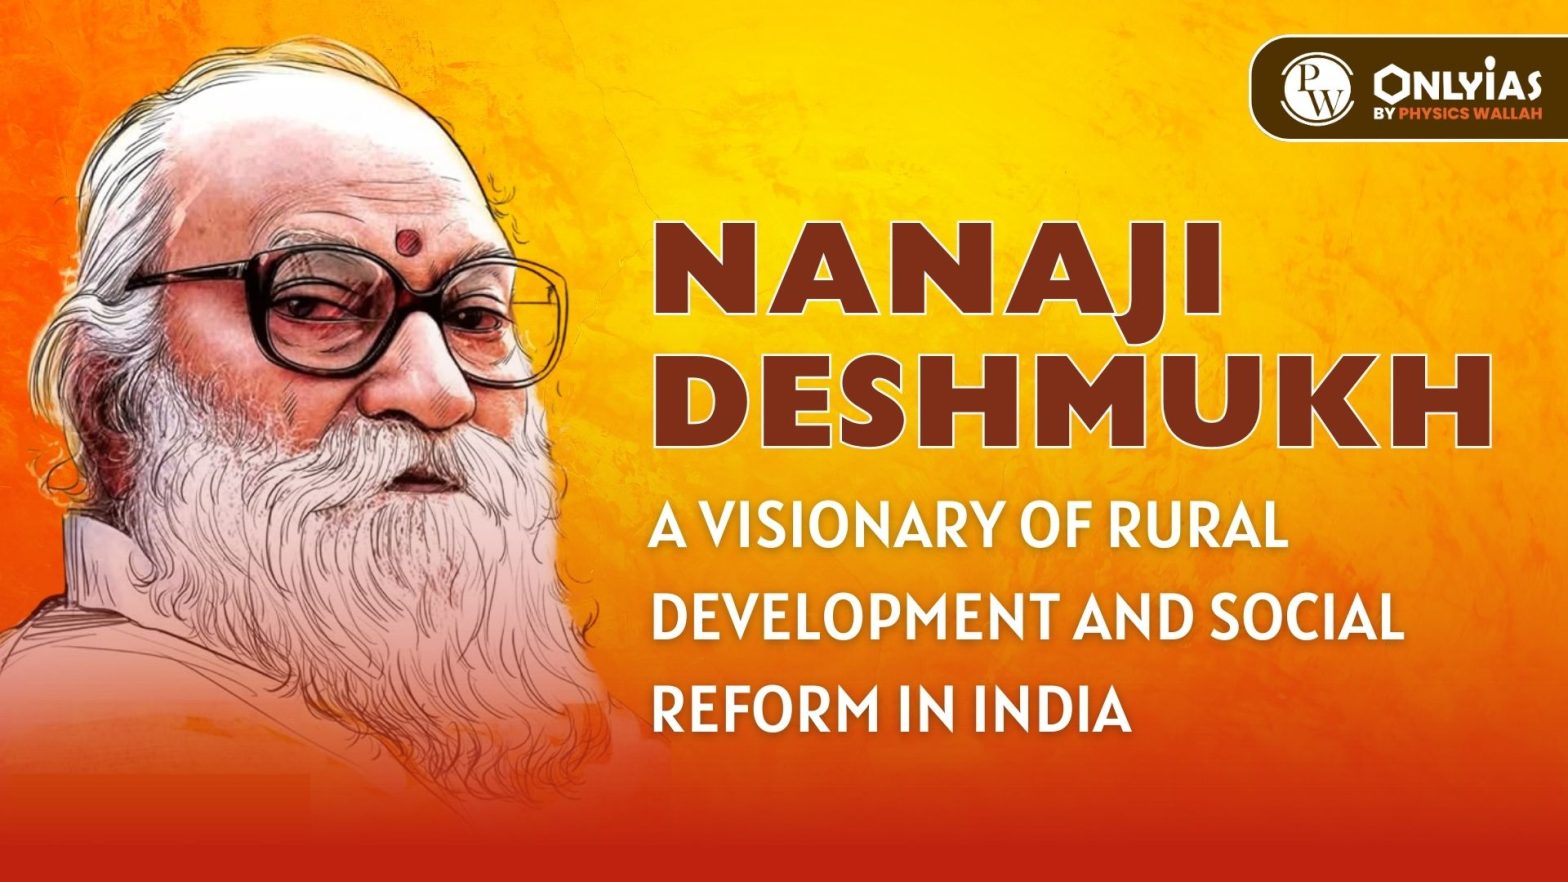 Nanaji Deshmukh: A Visionary of Rural Development and Social Reform in India